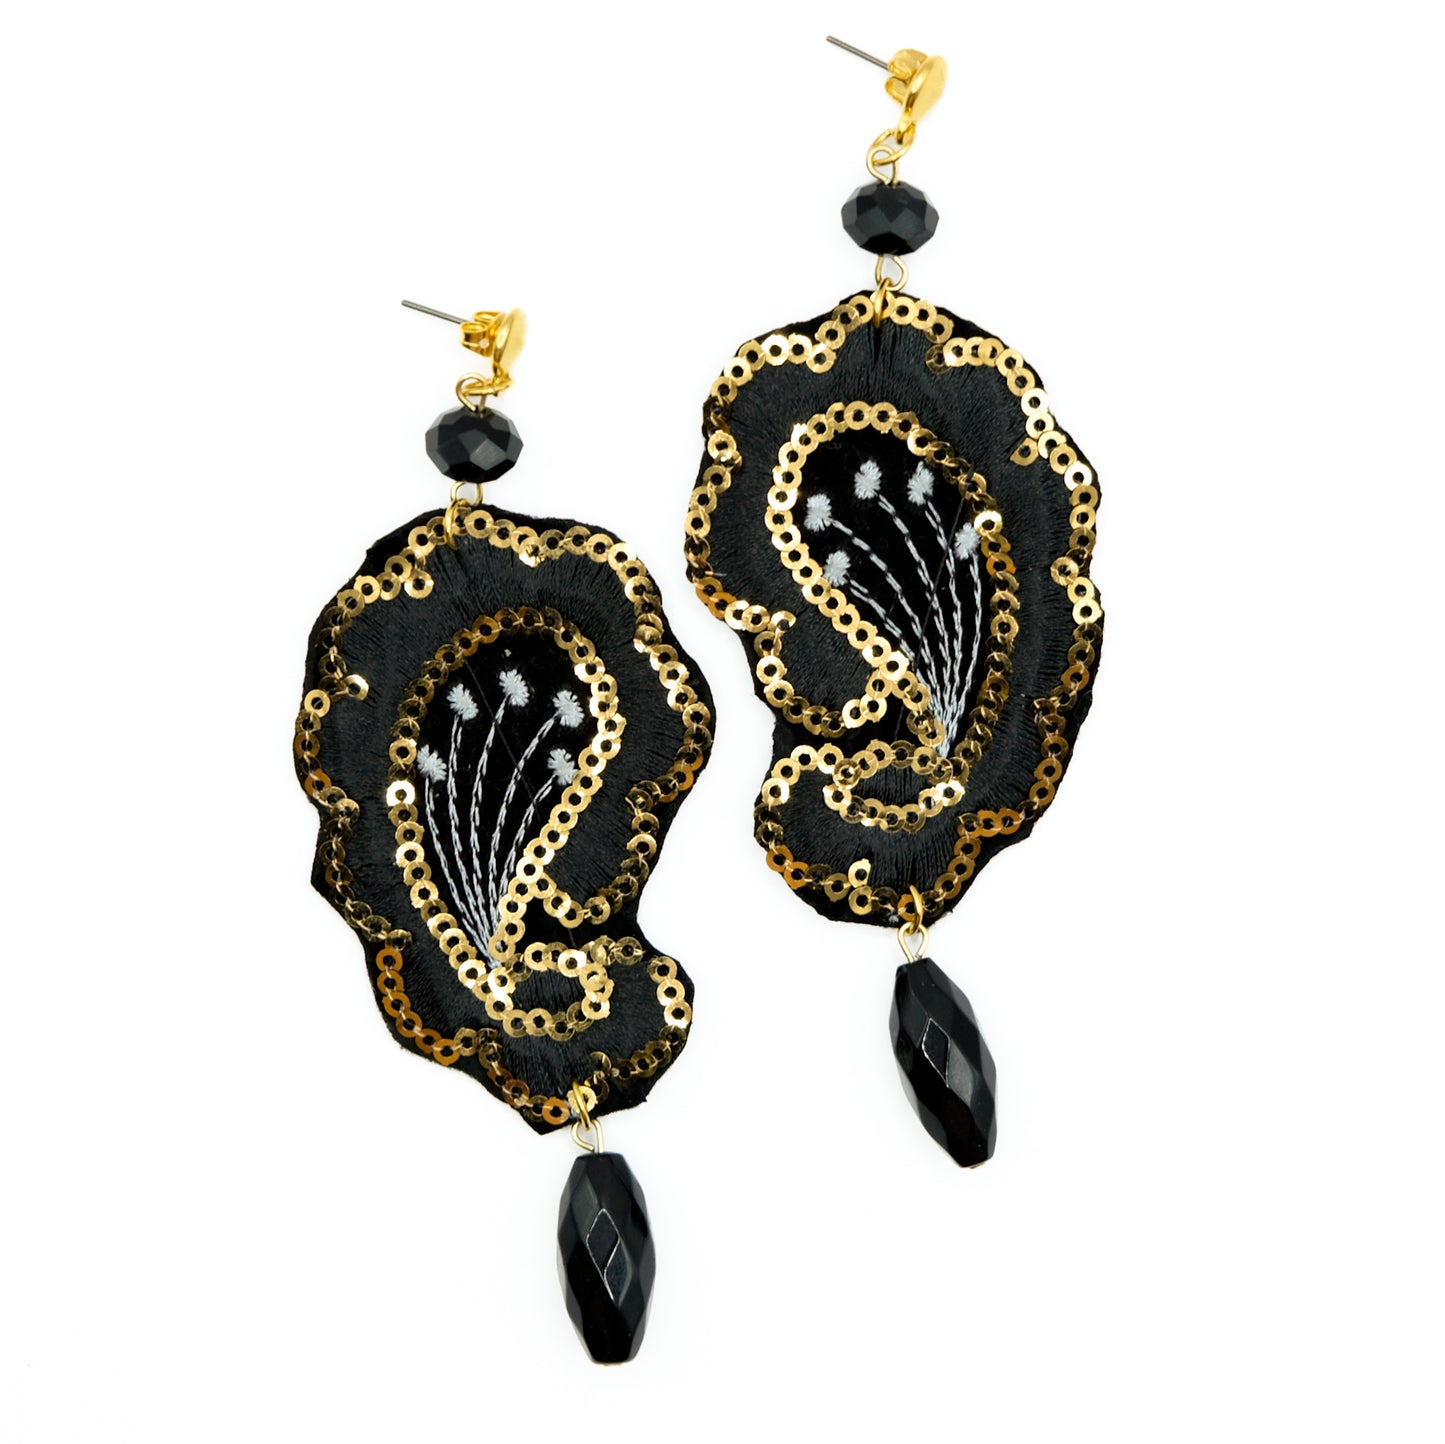 Black rain earrings